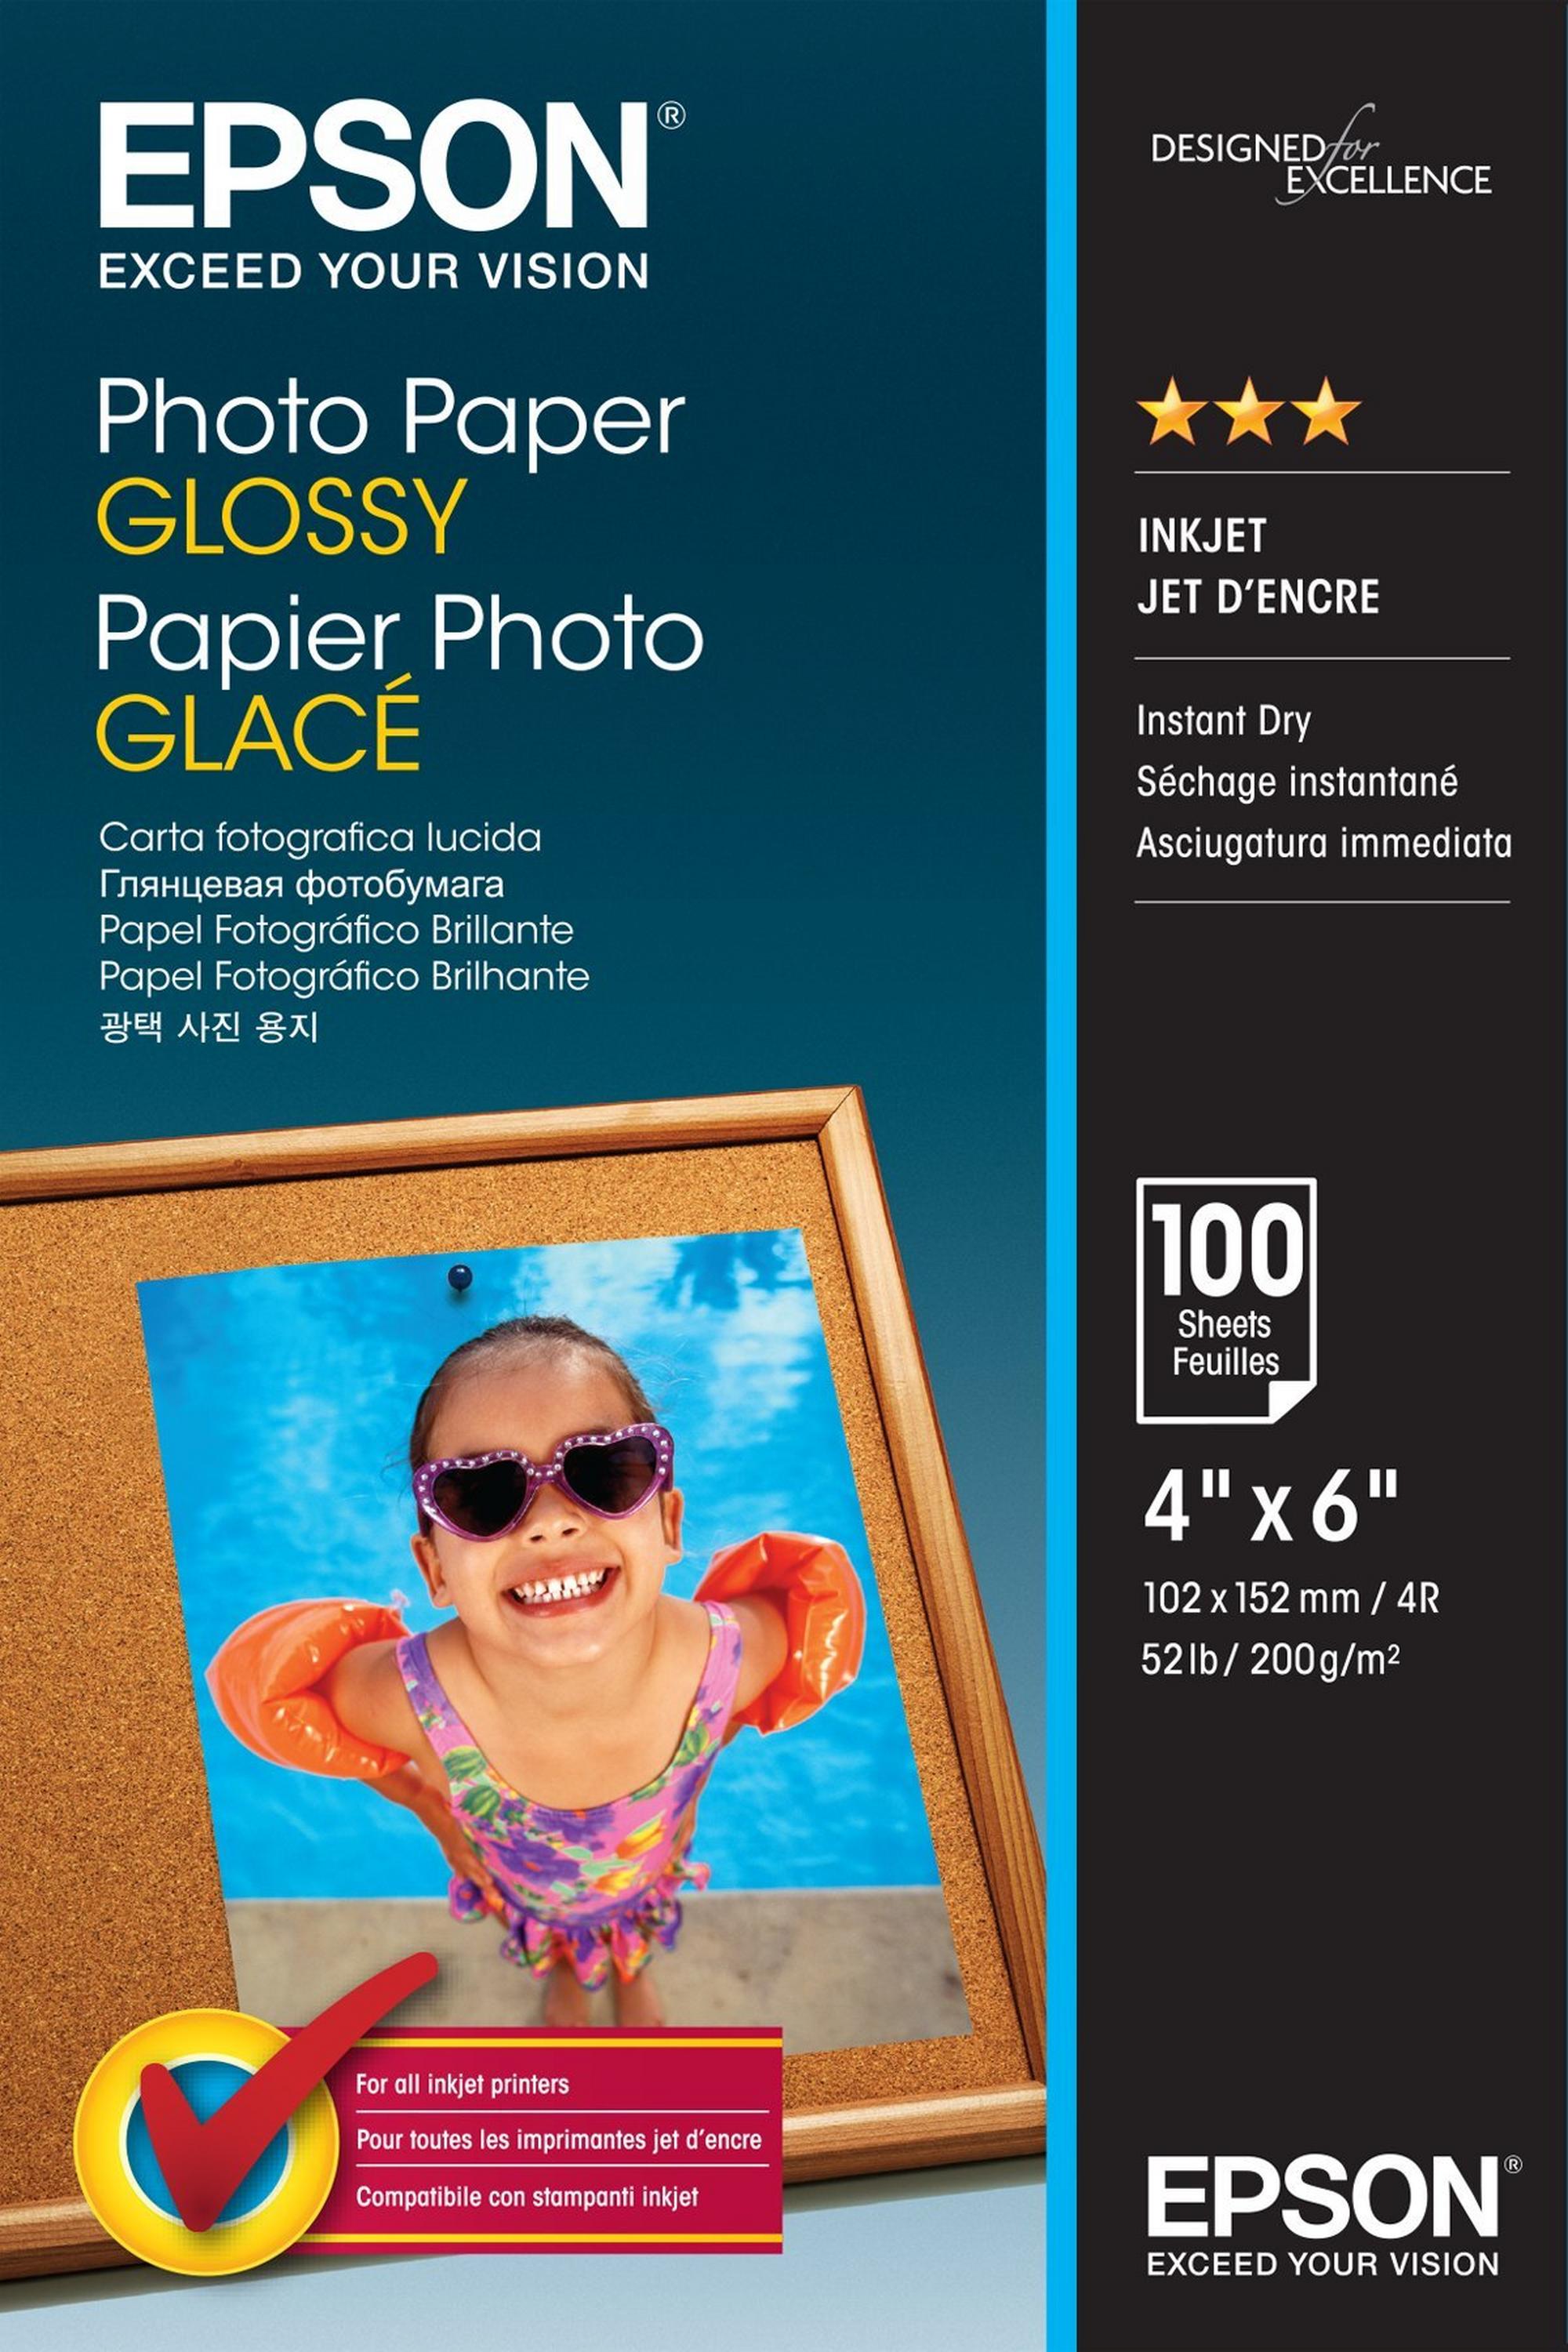 Epson Photo Paper Glossy - 10x15cm, 200g/m² - 100 sheets